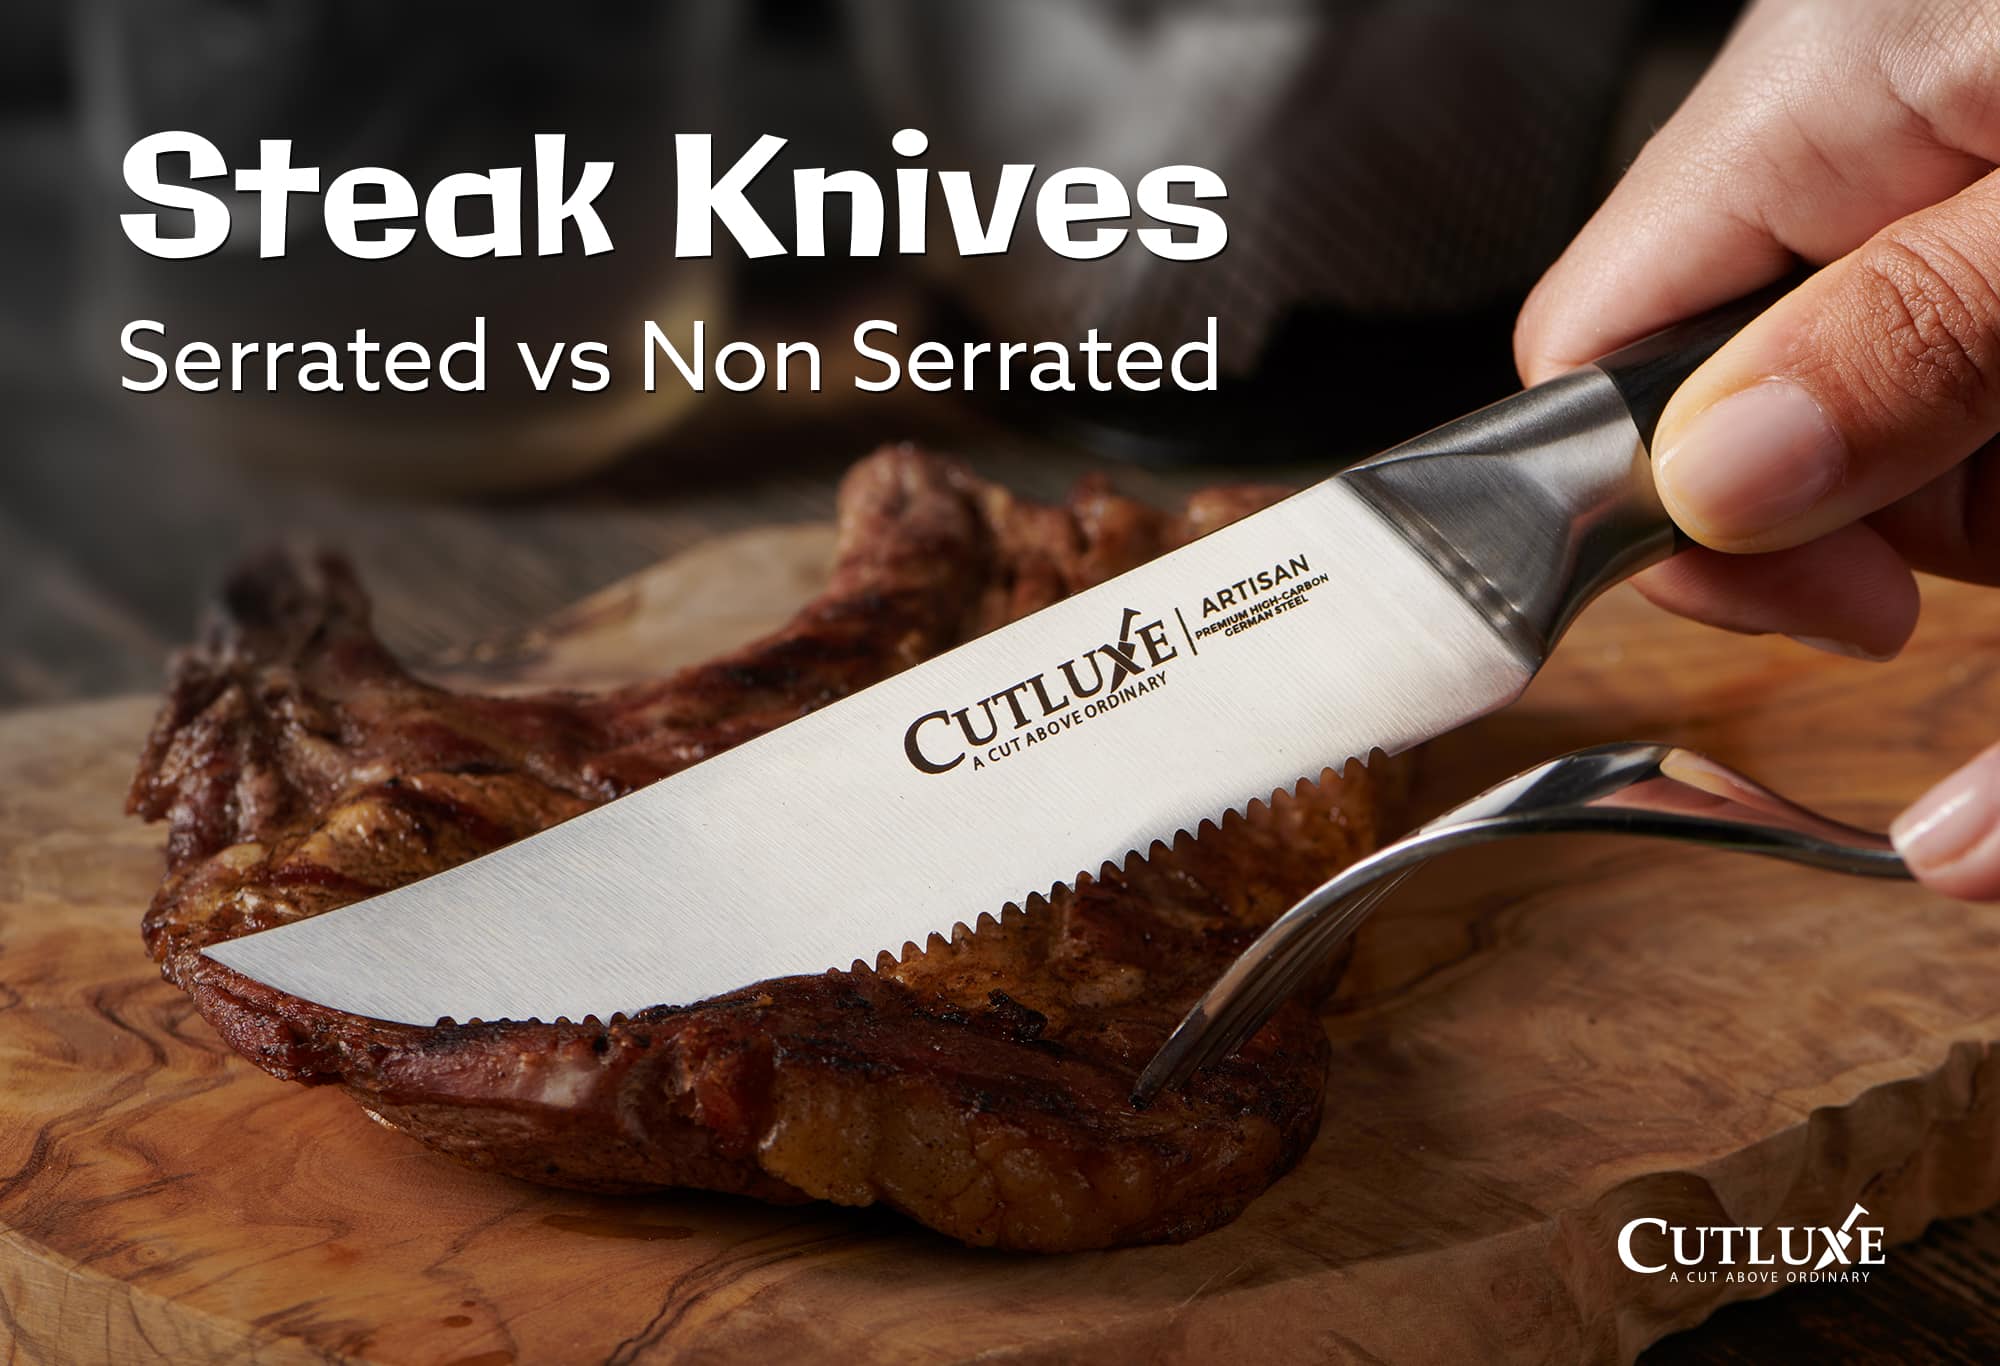 Serrated Vs Non Serrated Steak Knives: Main Differences